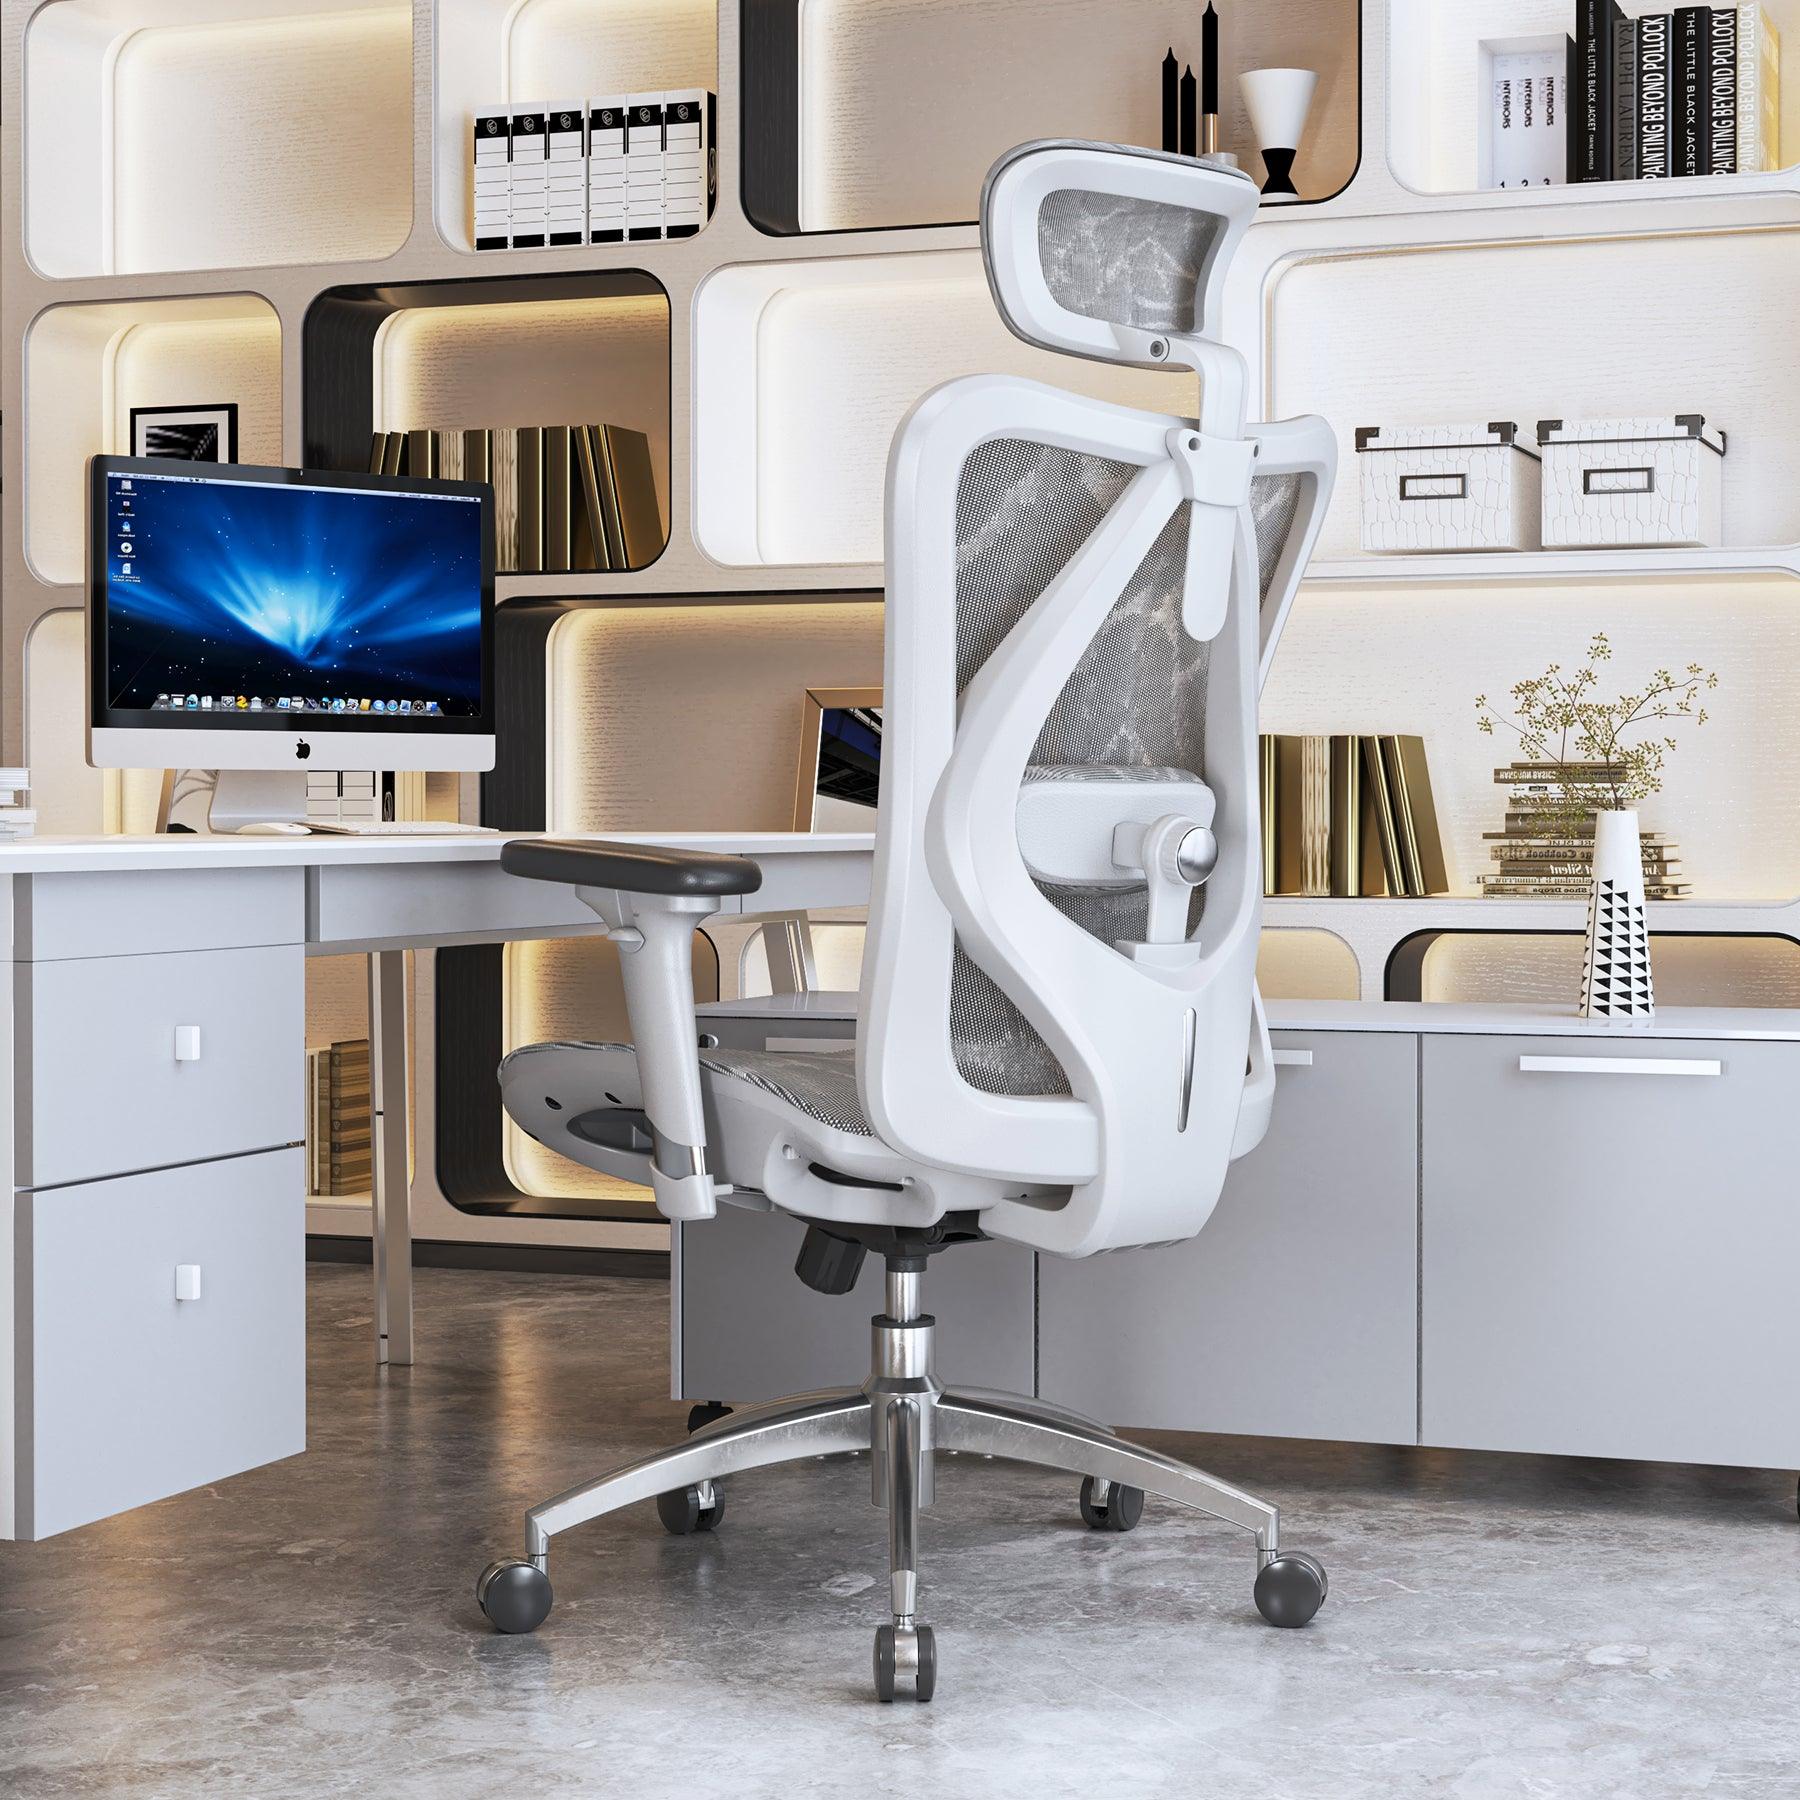 Sihoo M57 Ergonomic Chair - Options Dot PH